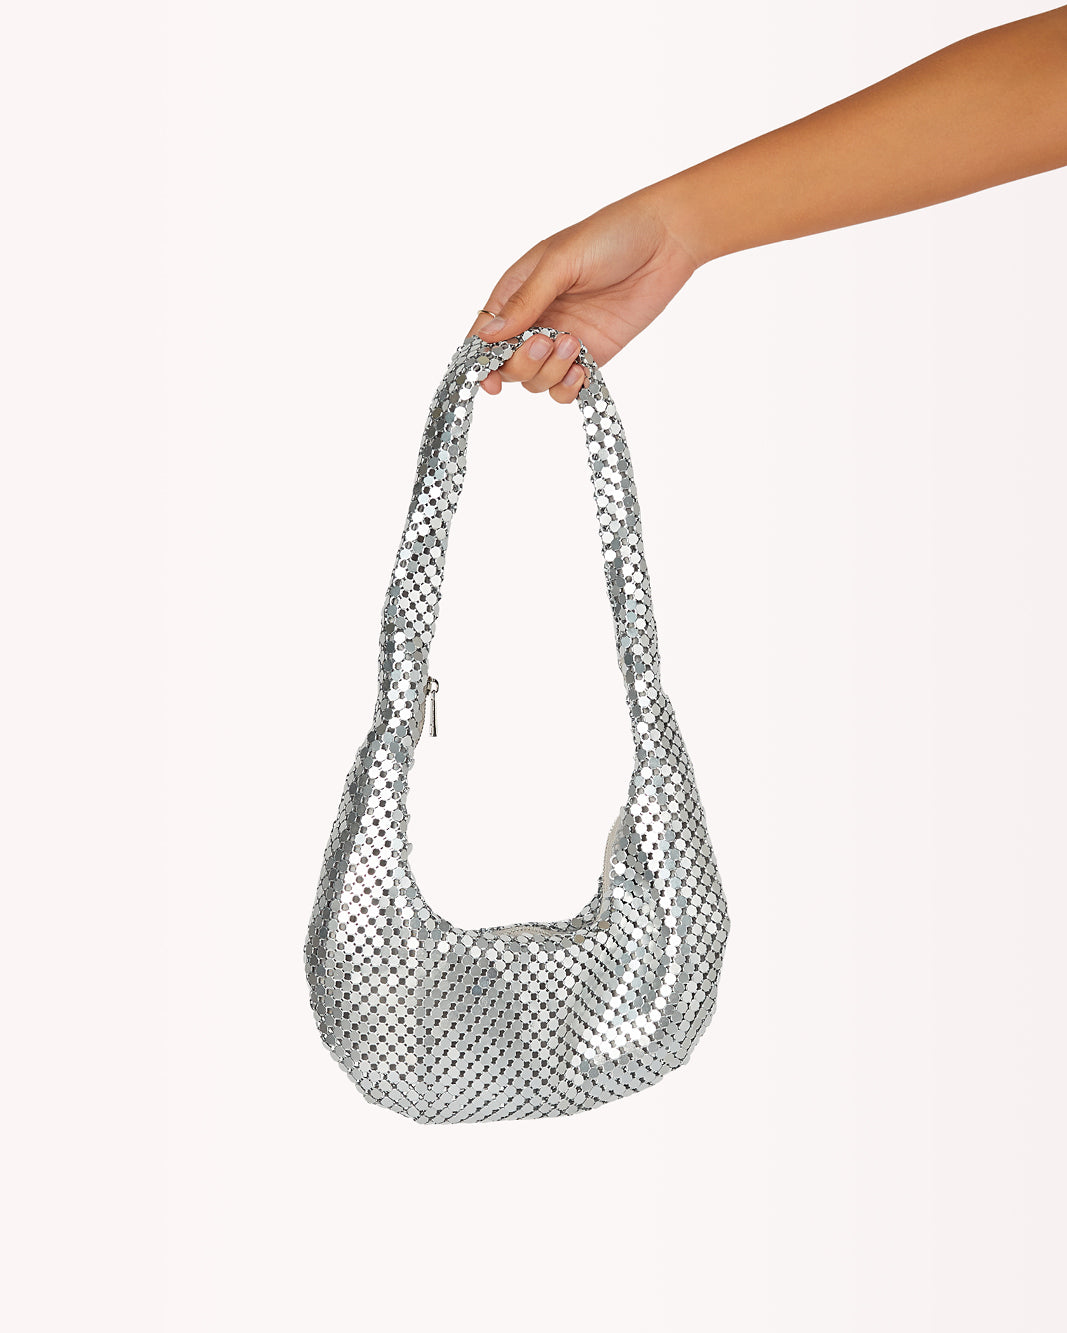 LUNA SHOULDER BAG - SILVER GLOWMESH-Handbags-Billini-O/S-BILLINI USA